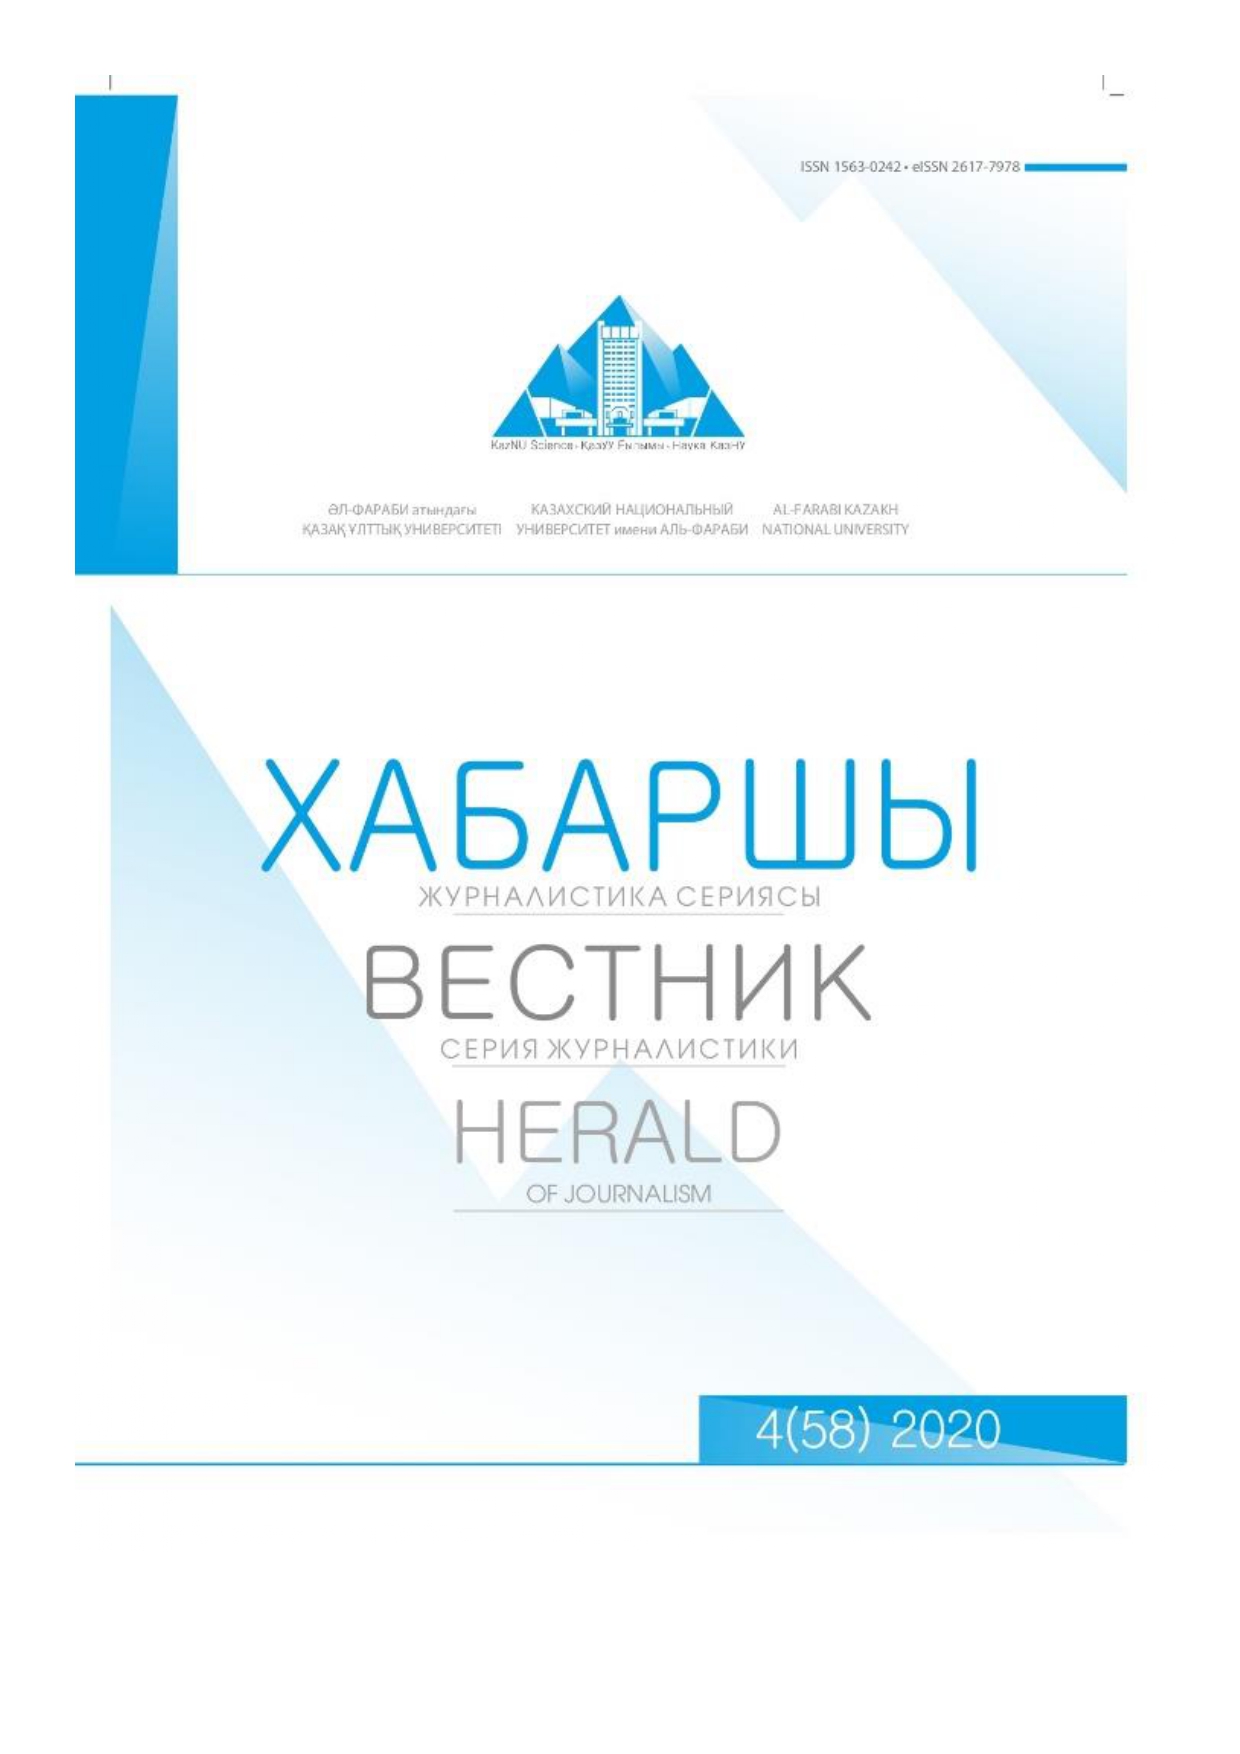 					View Vol. 58 No. 4 (2020): Al-Farabi kazakh national university. Herald of journalism
				